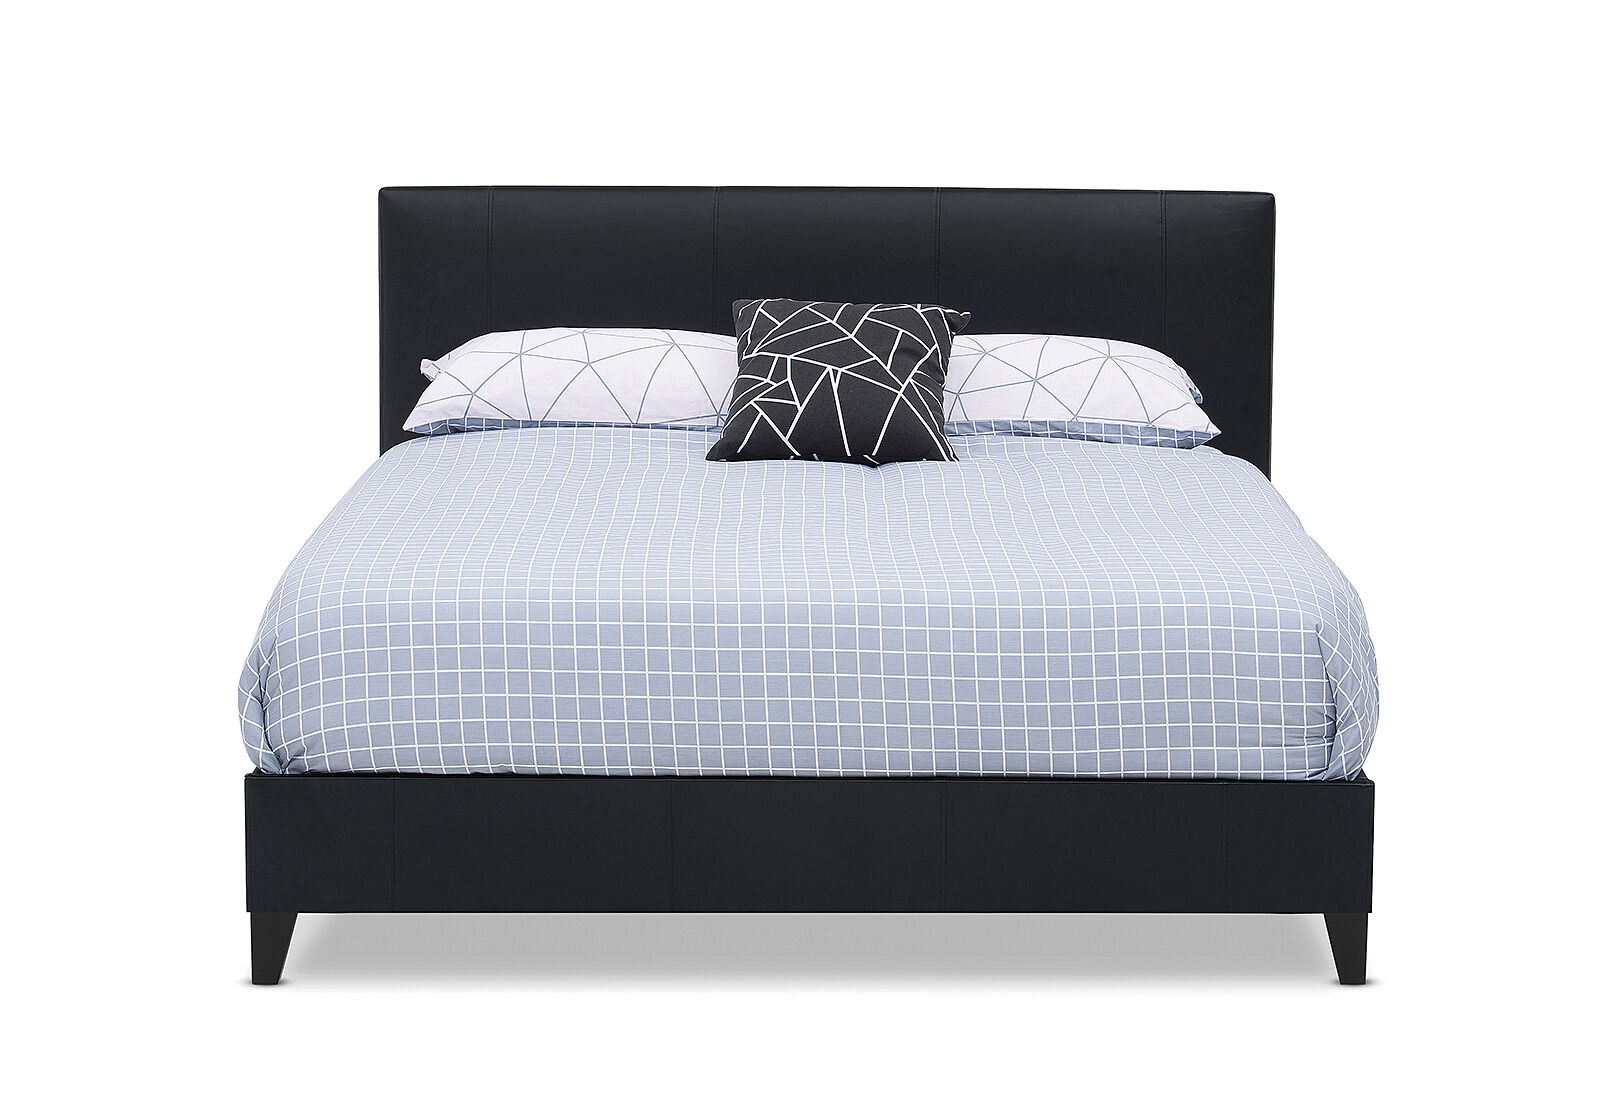 Bardot Mk2 Double Bed Amart Furniture